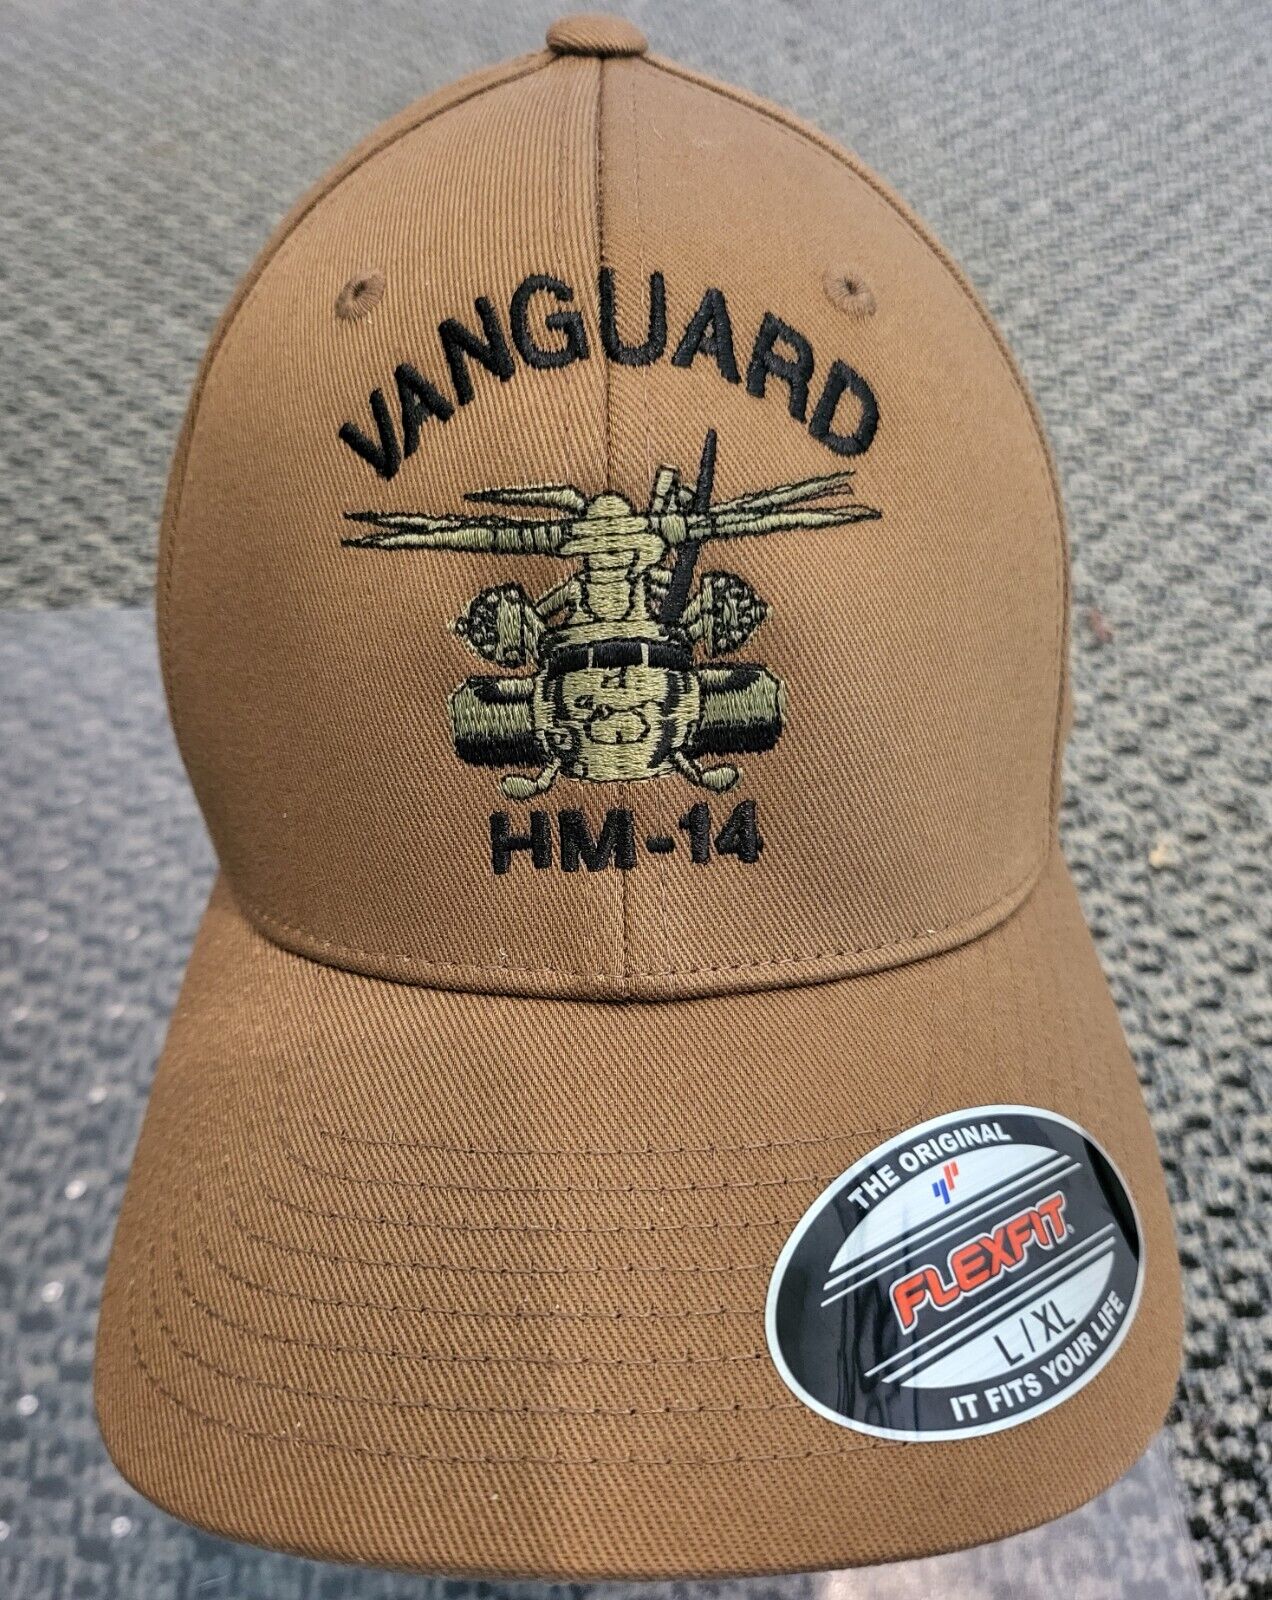 HM-14 VANGUARD FLEX FIT BALL CAP IN THE SIZE L/XL